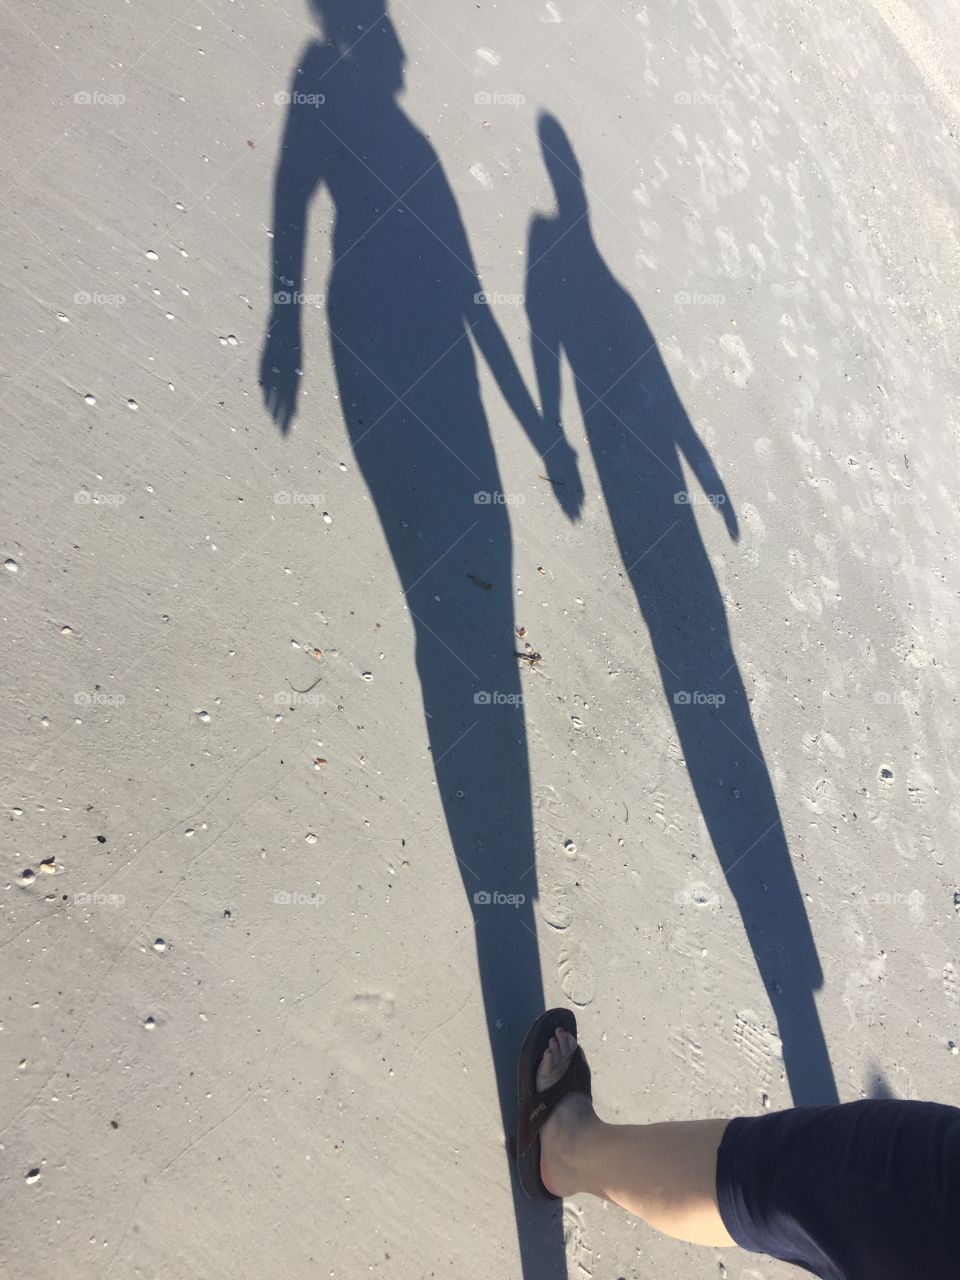 Shadows walking on the beach